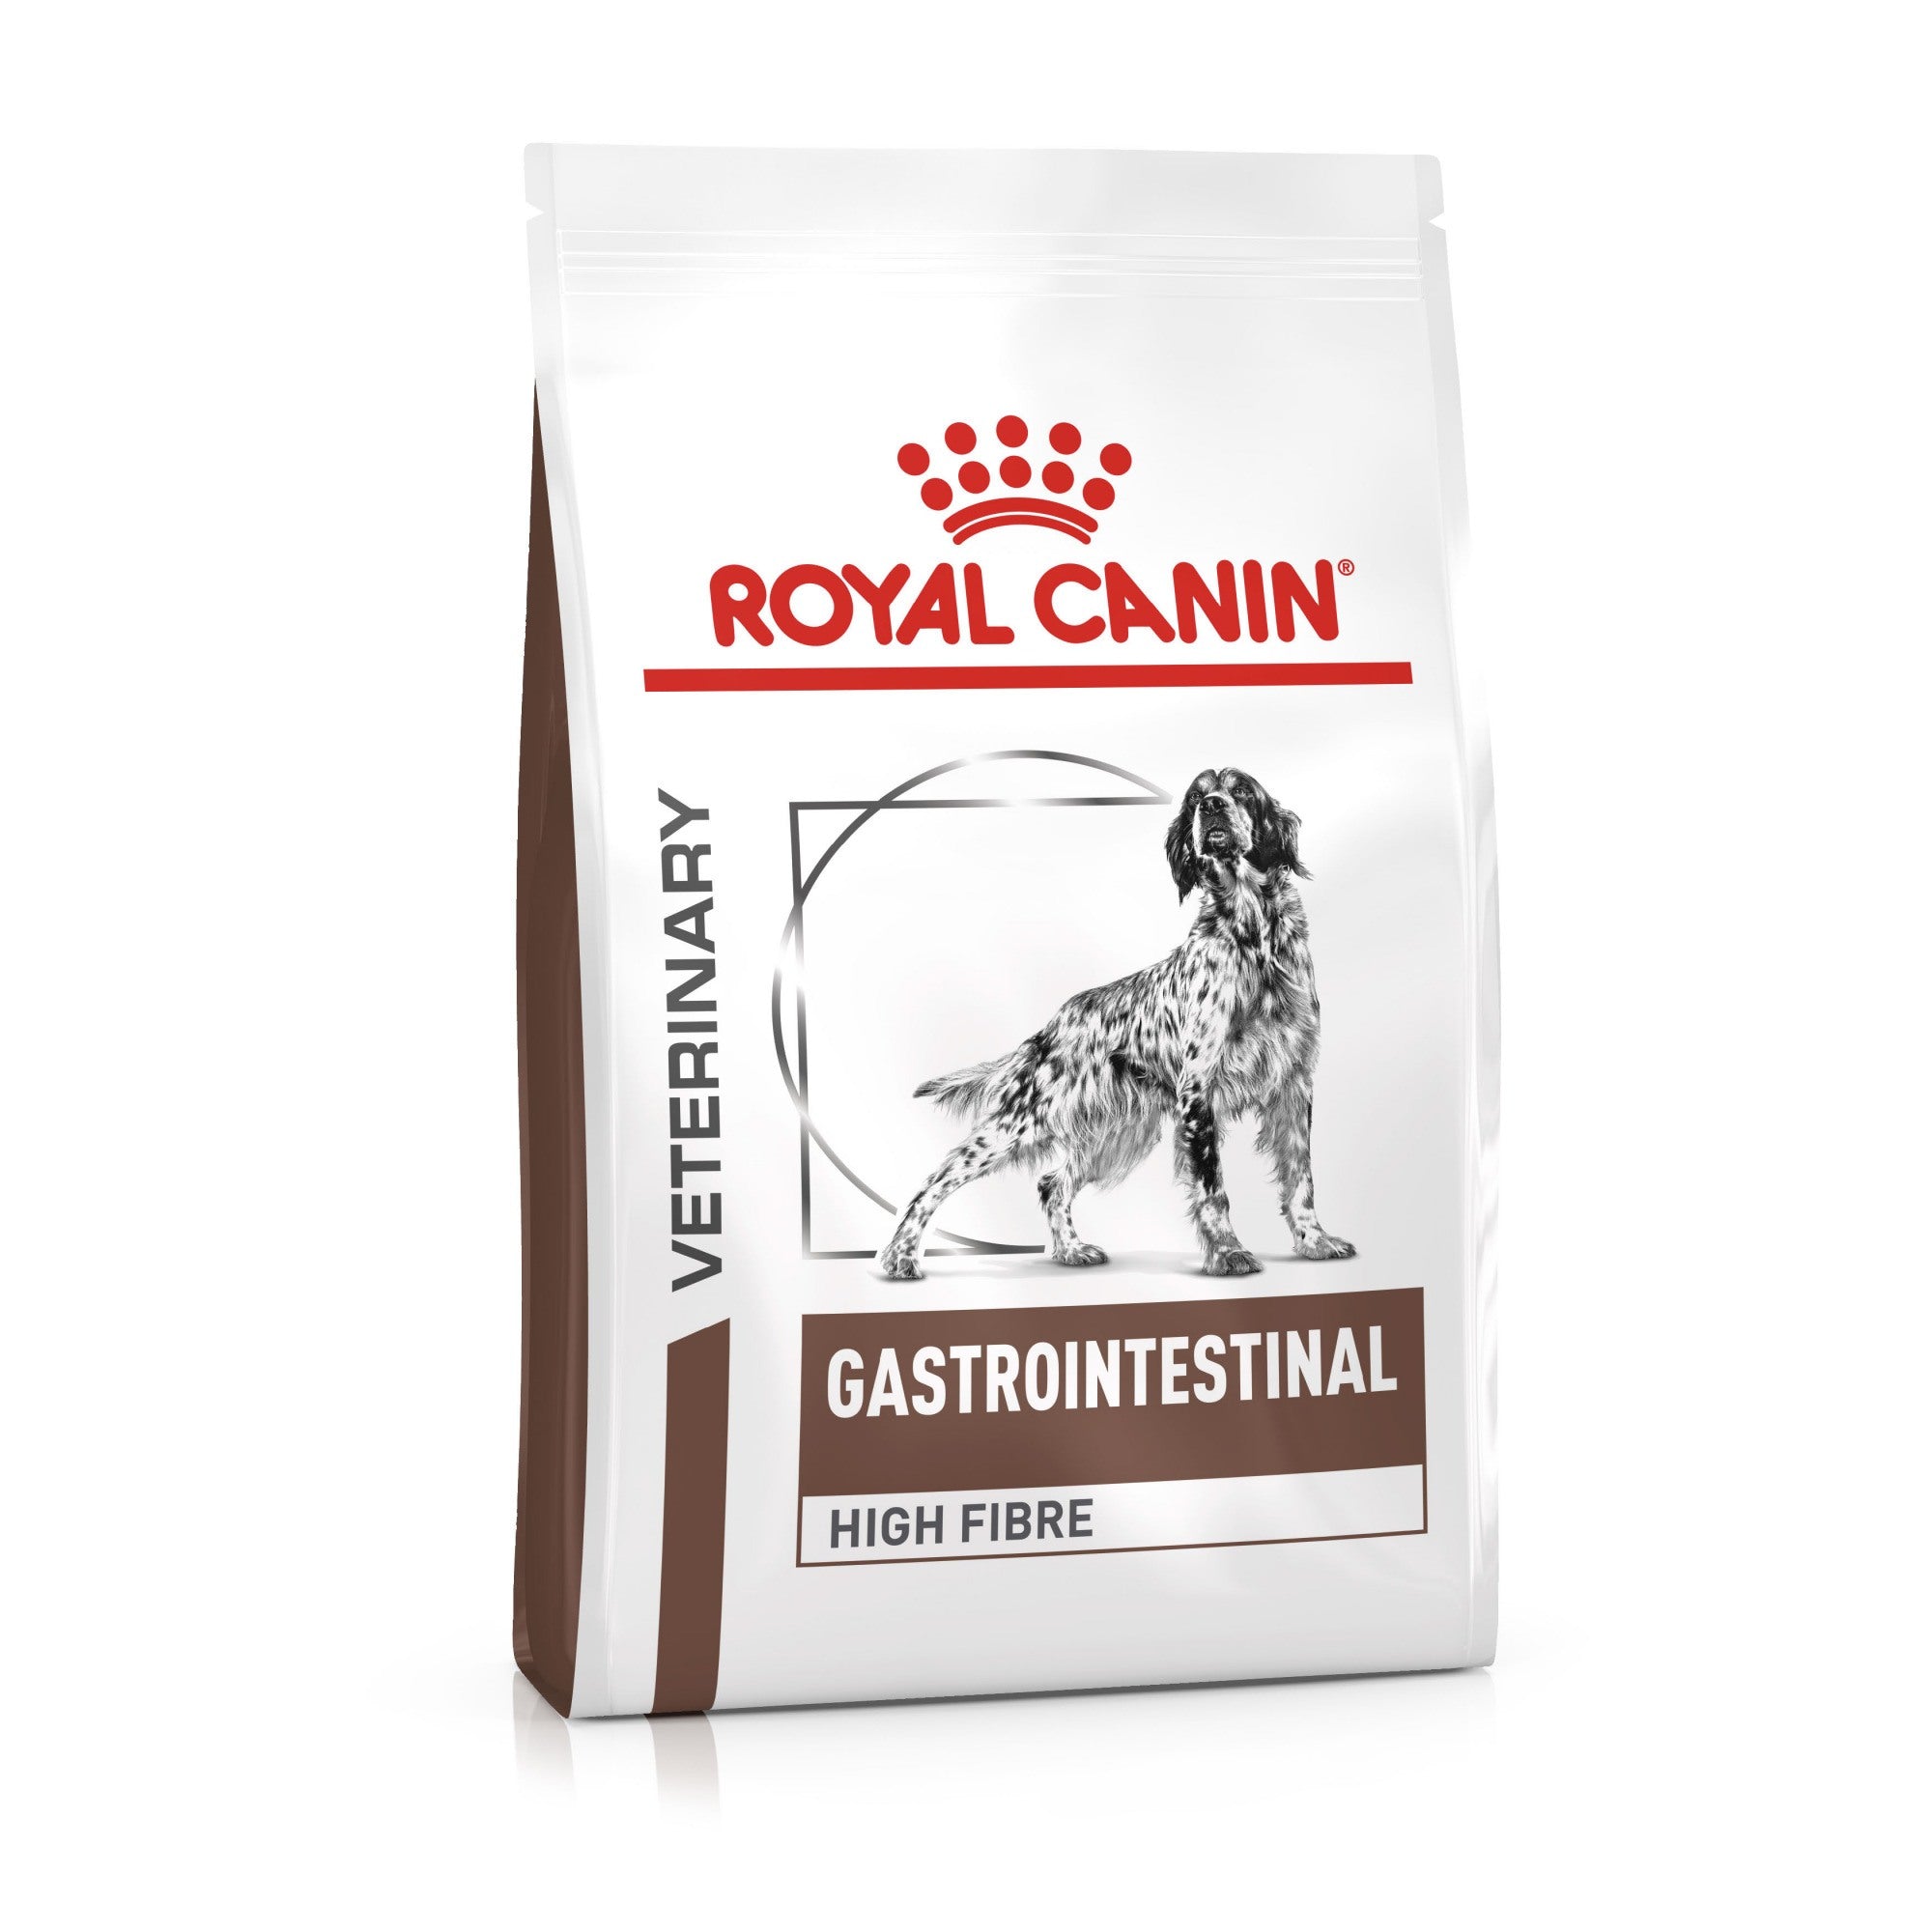 ROYAL CANIN® Gastro Intestinal High Fibre Dry Dog Food